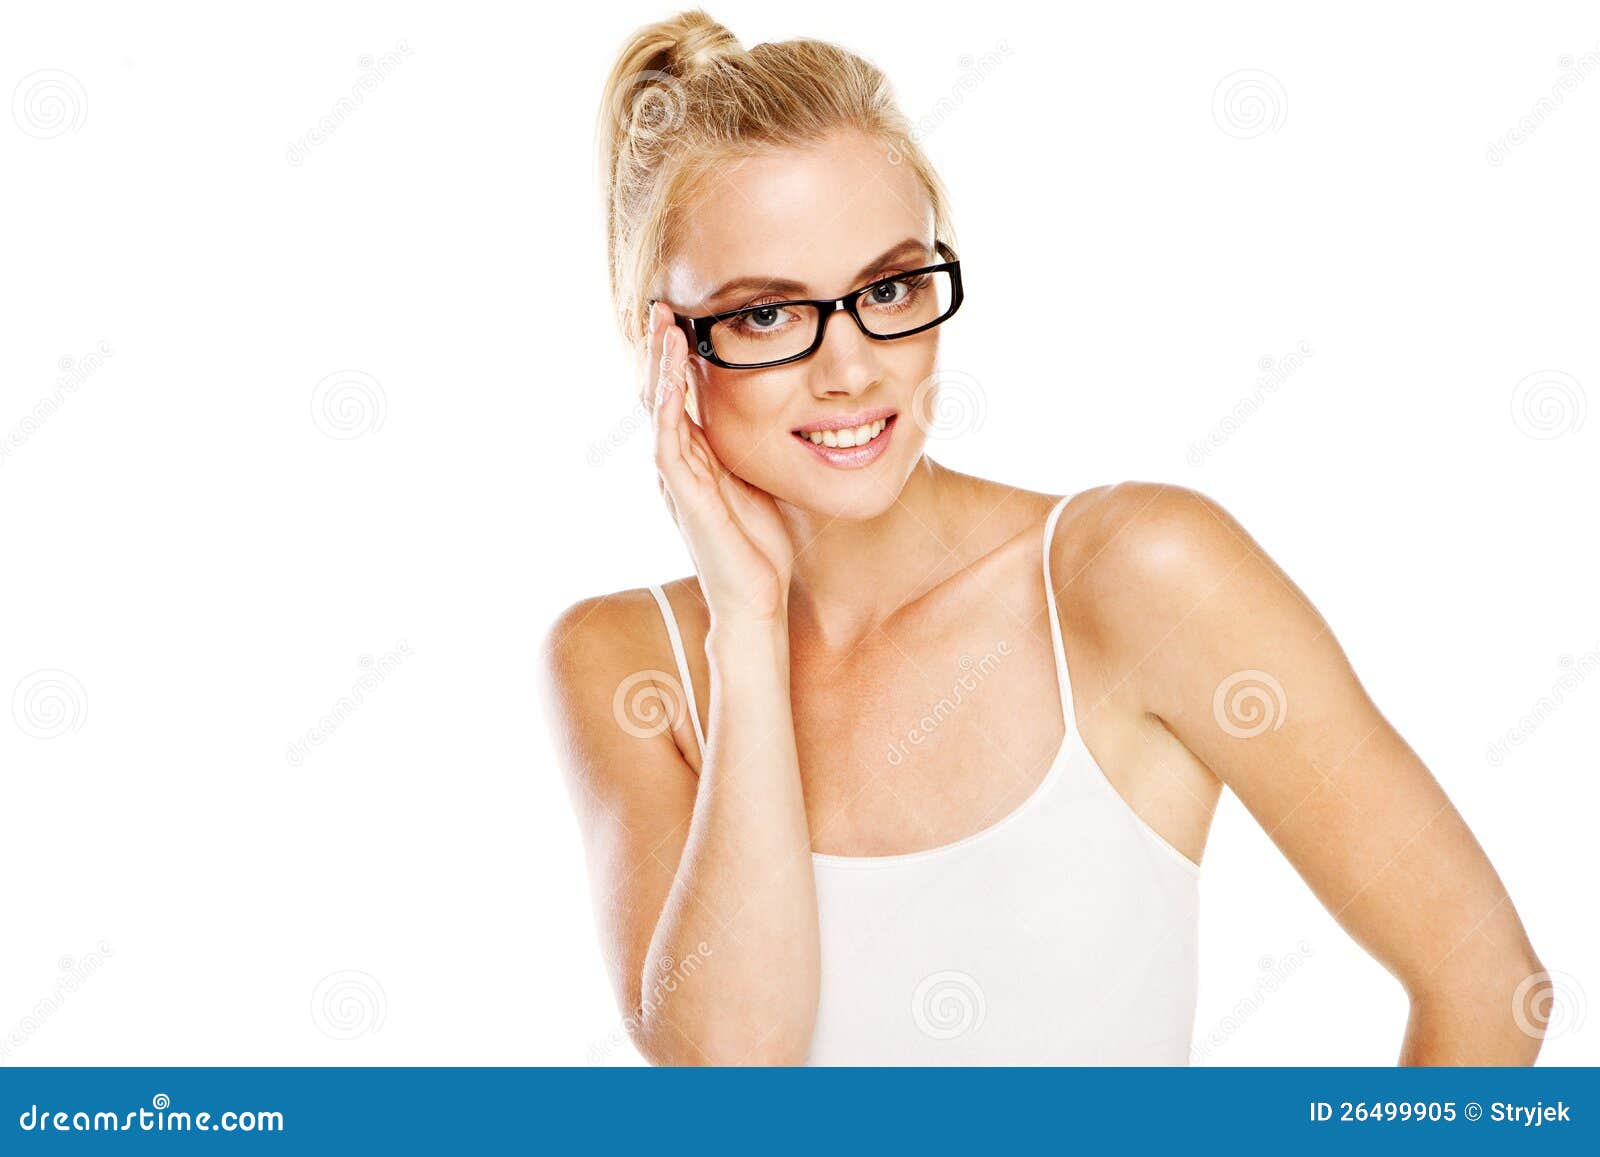 intelligent woman wearing glasses 26499905